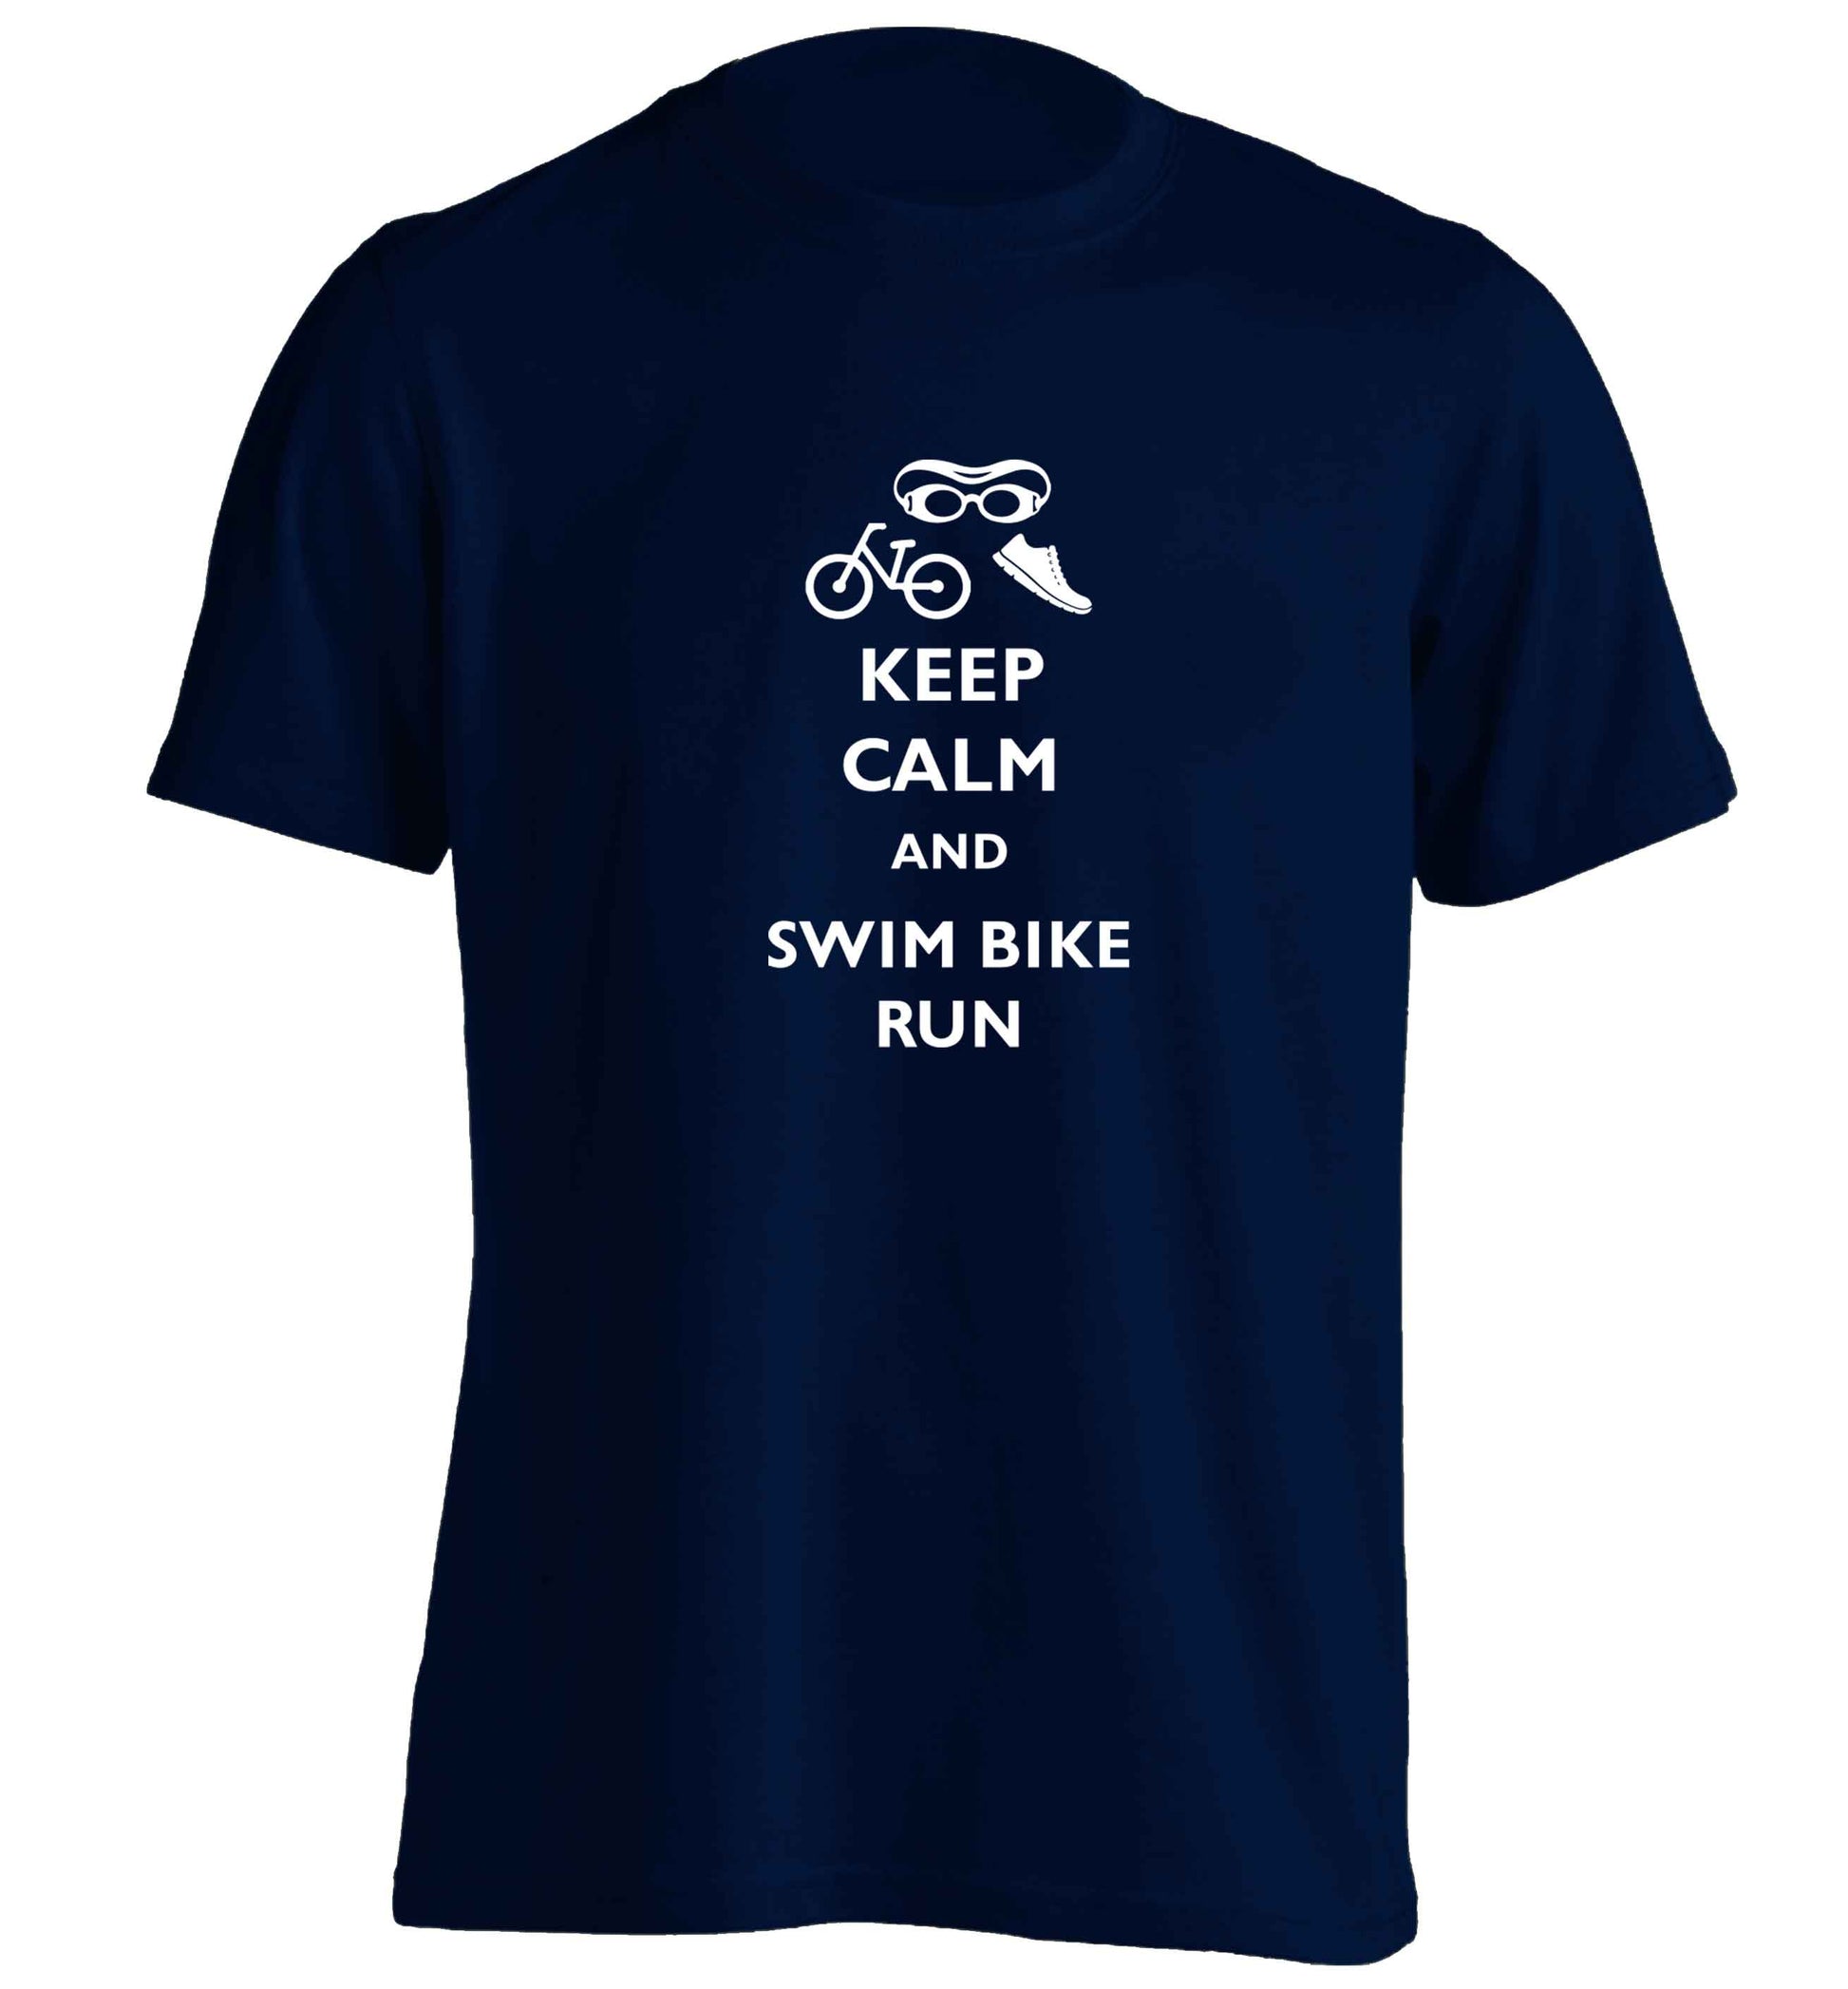 Keep calm and swim bike run adults unisex navy Tshirt 2XL